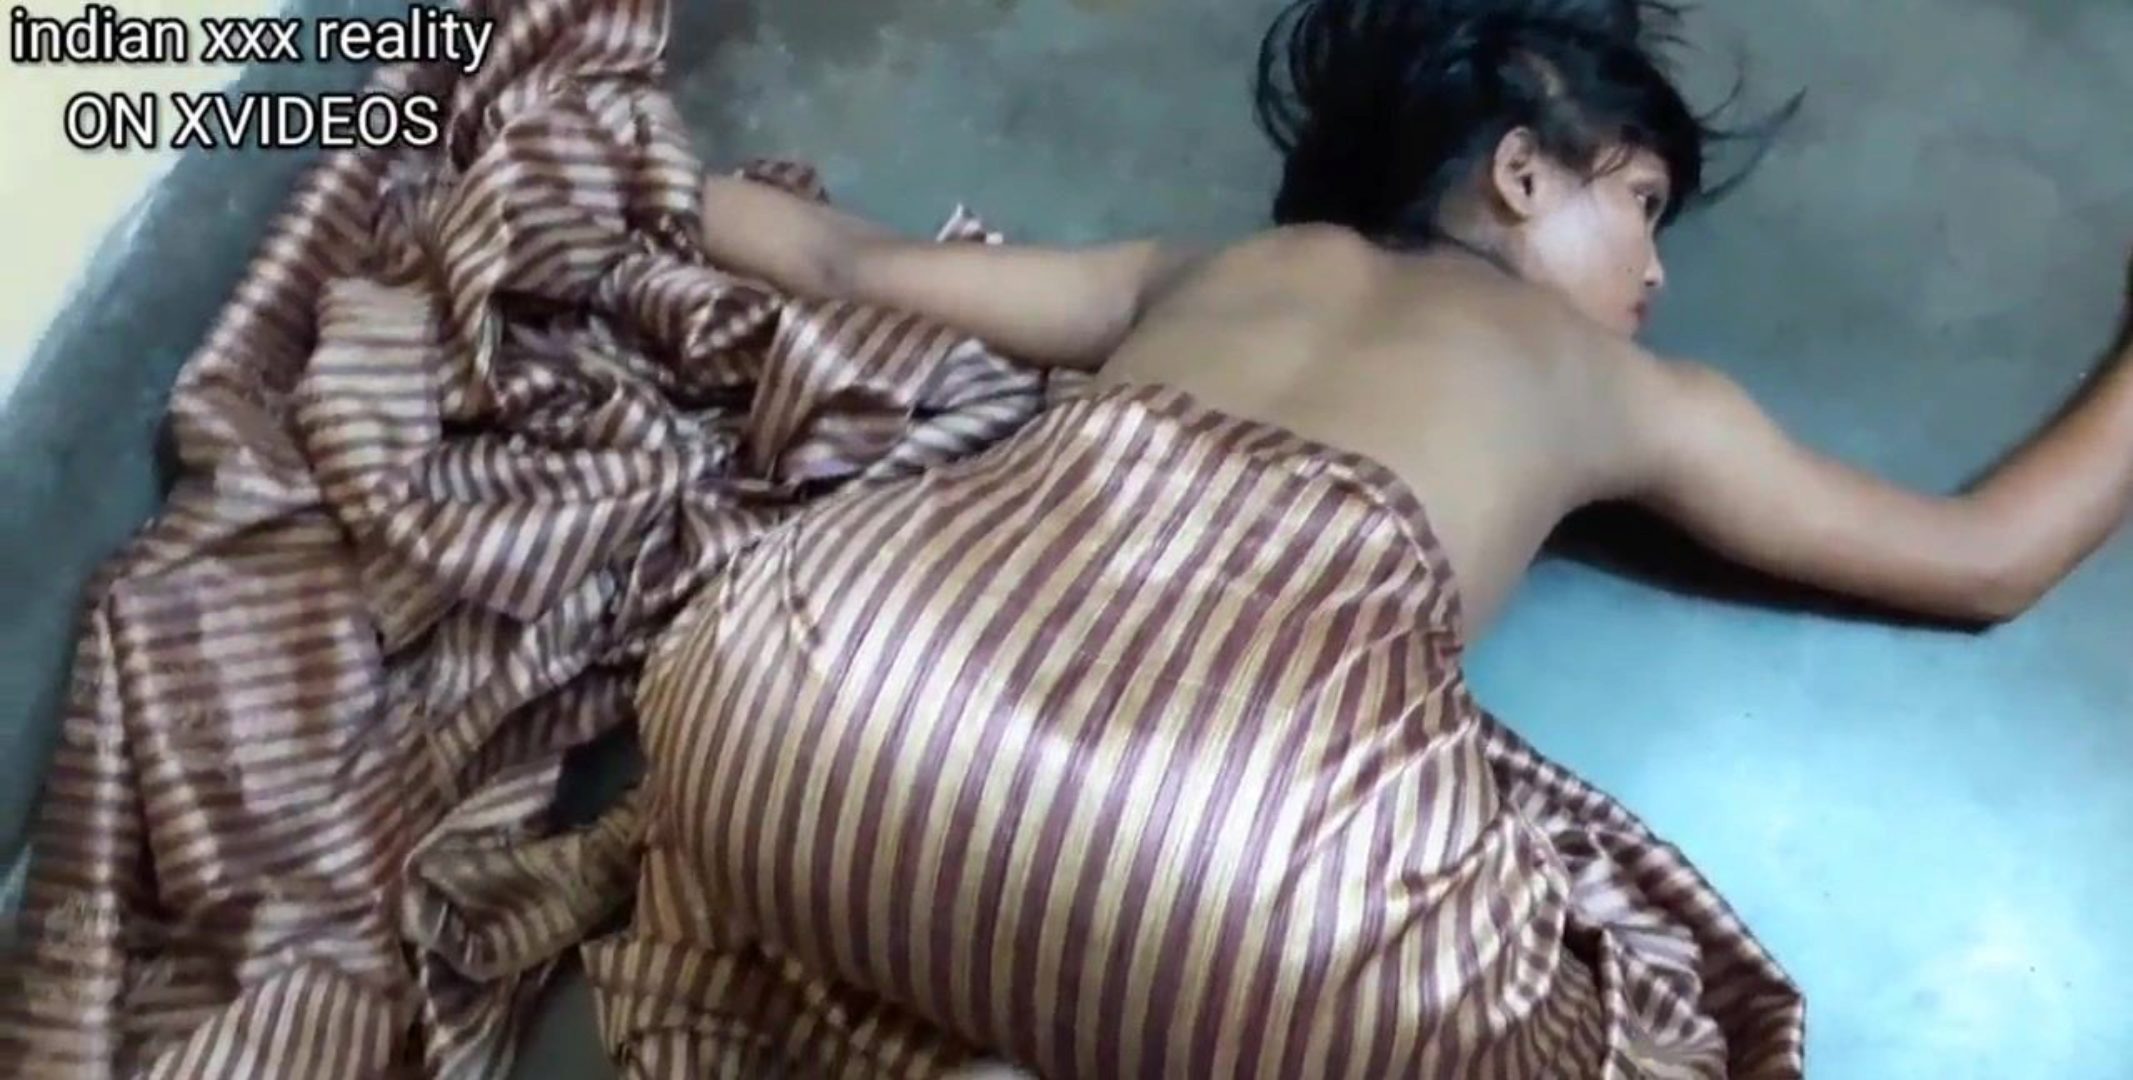 Saree Me Sex Vidrio With Hindi Dubbed Audeio - XVDS TV